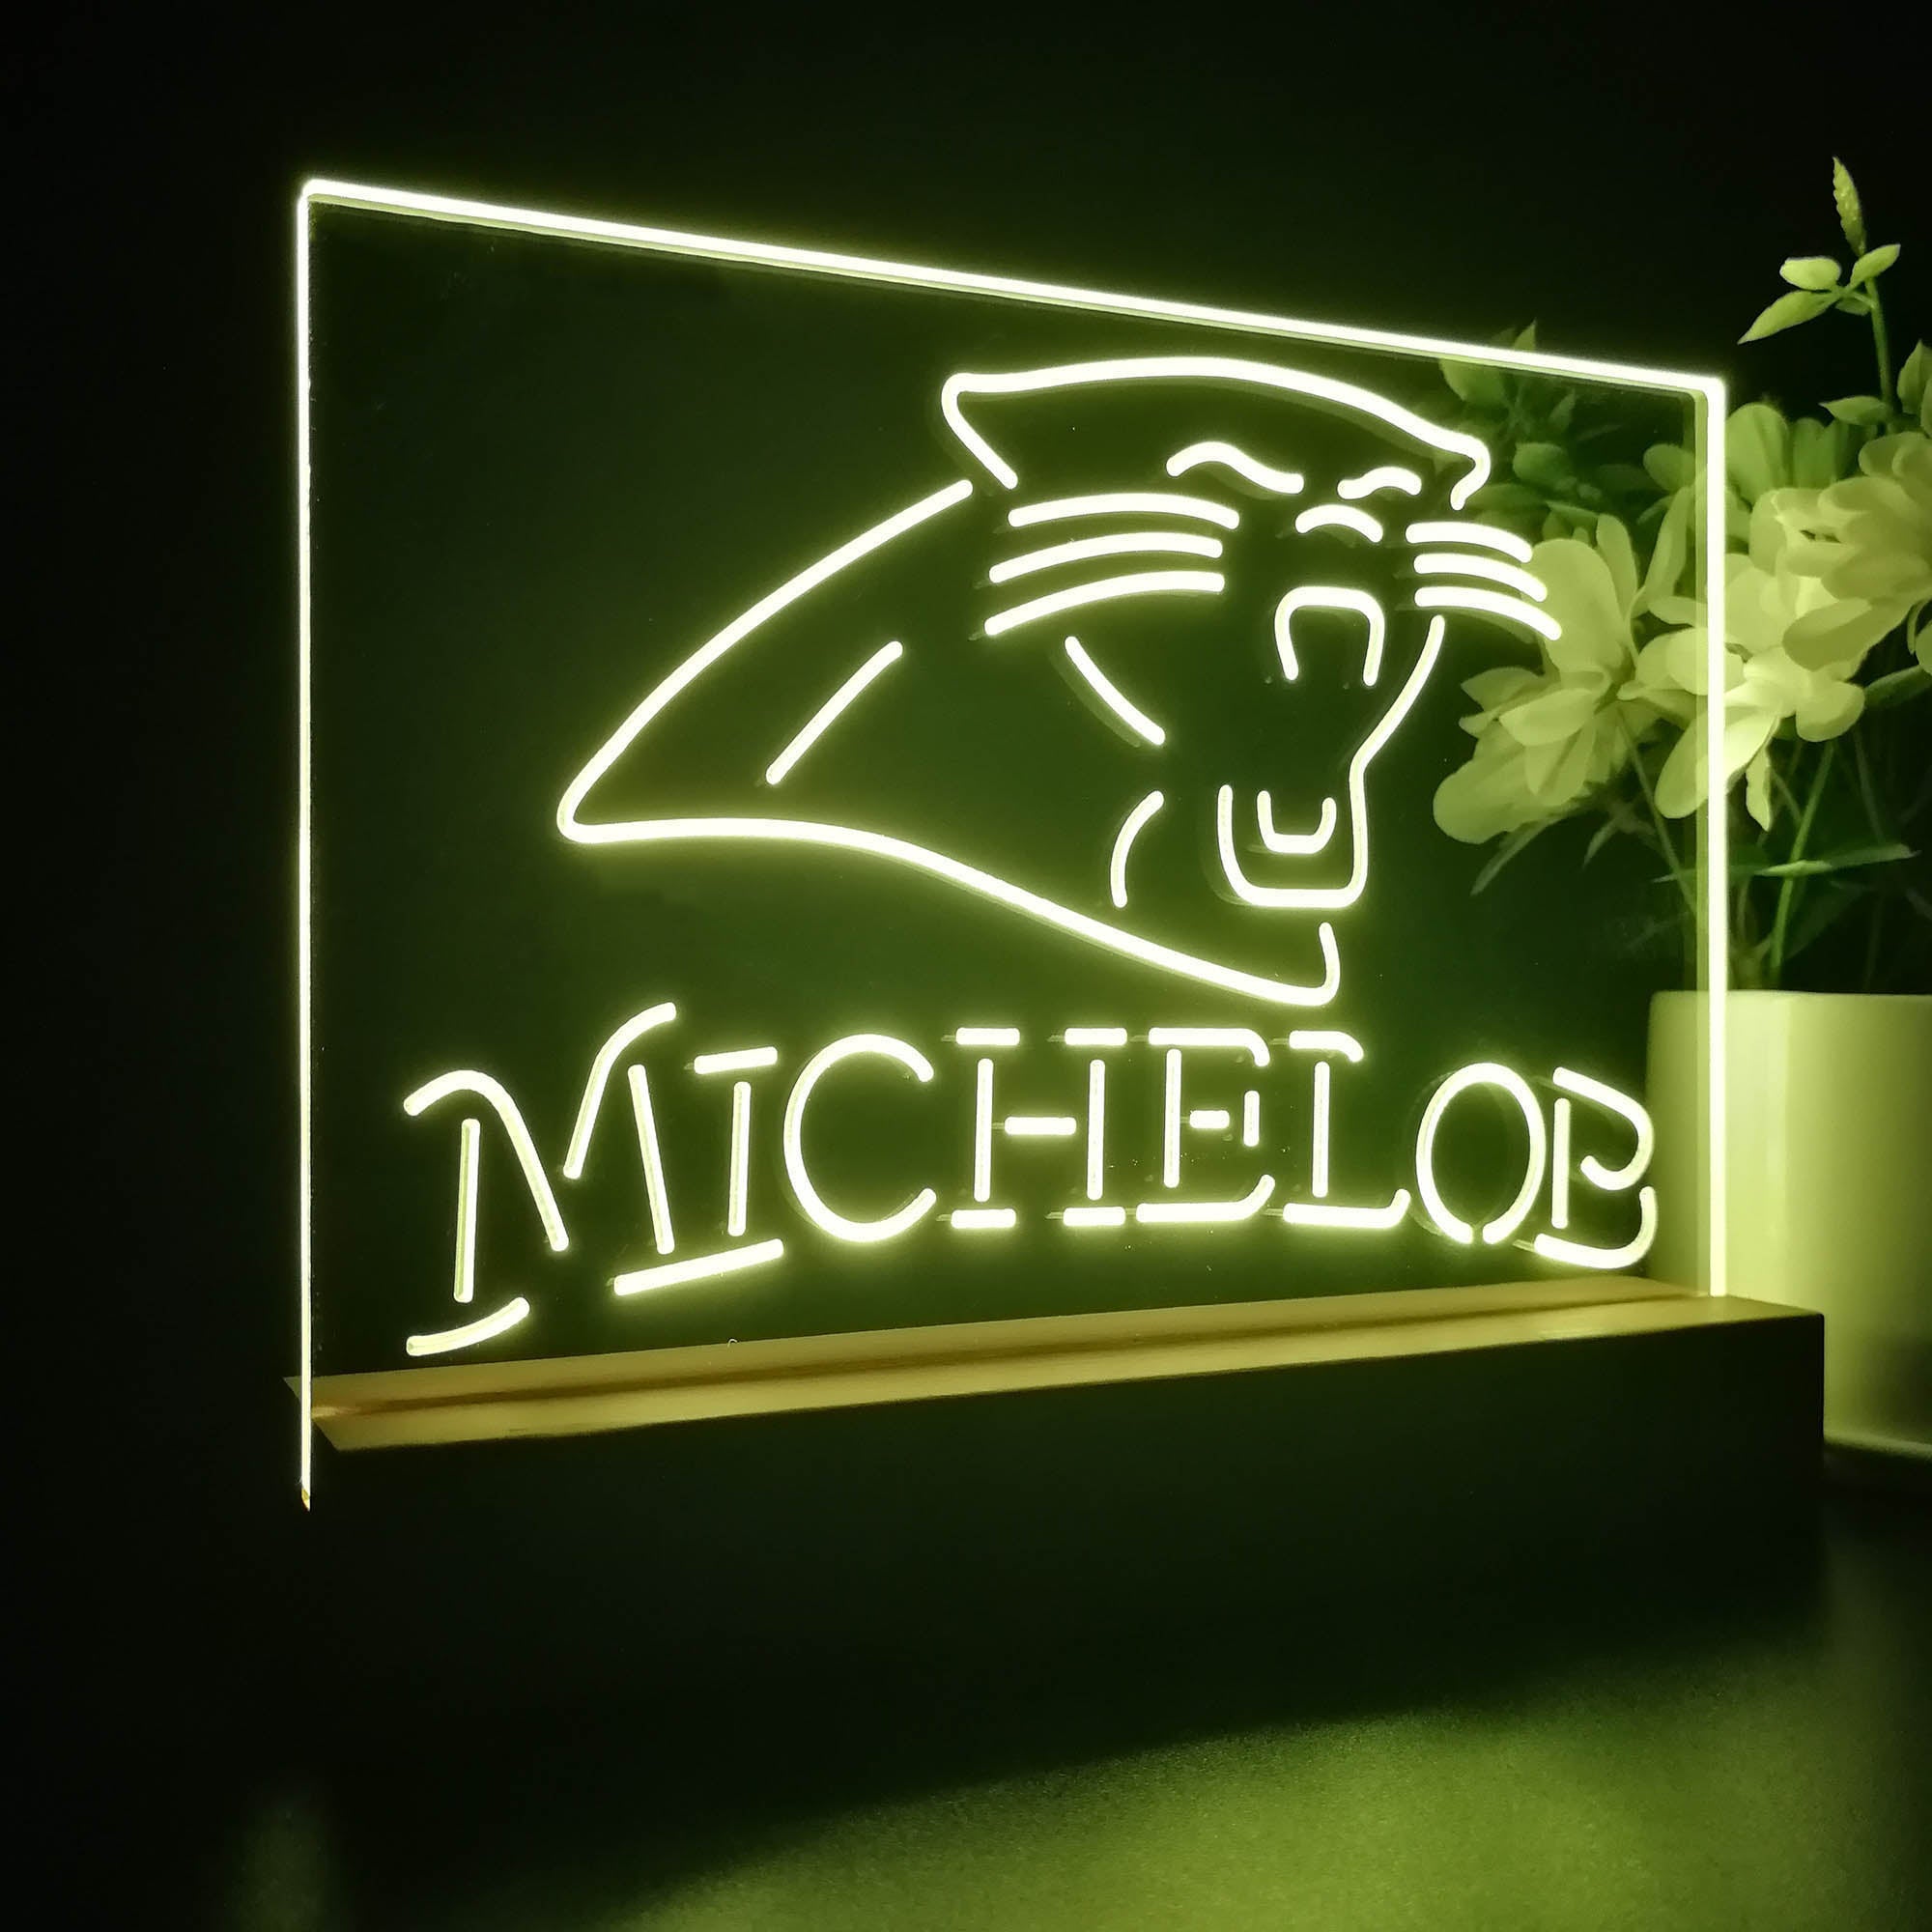 Carolina Panthers Michelob Bar 3D Illusion Night Light Desk Lamp